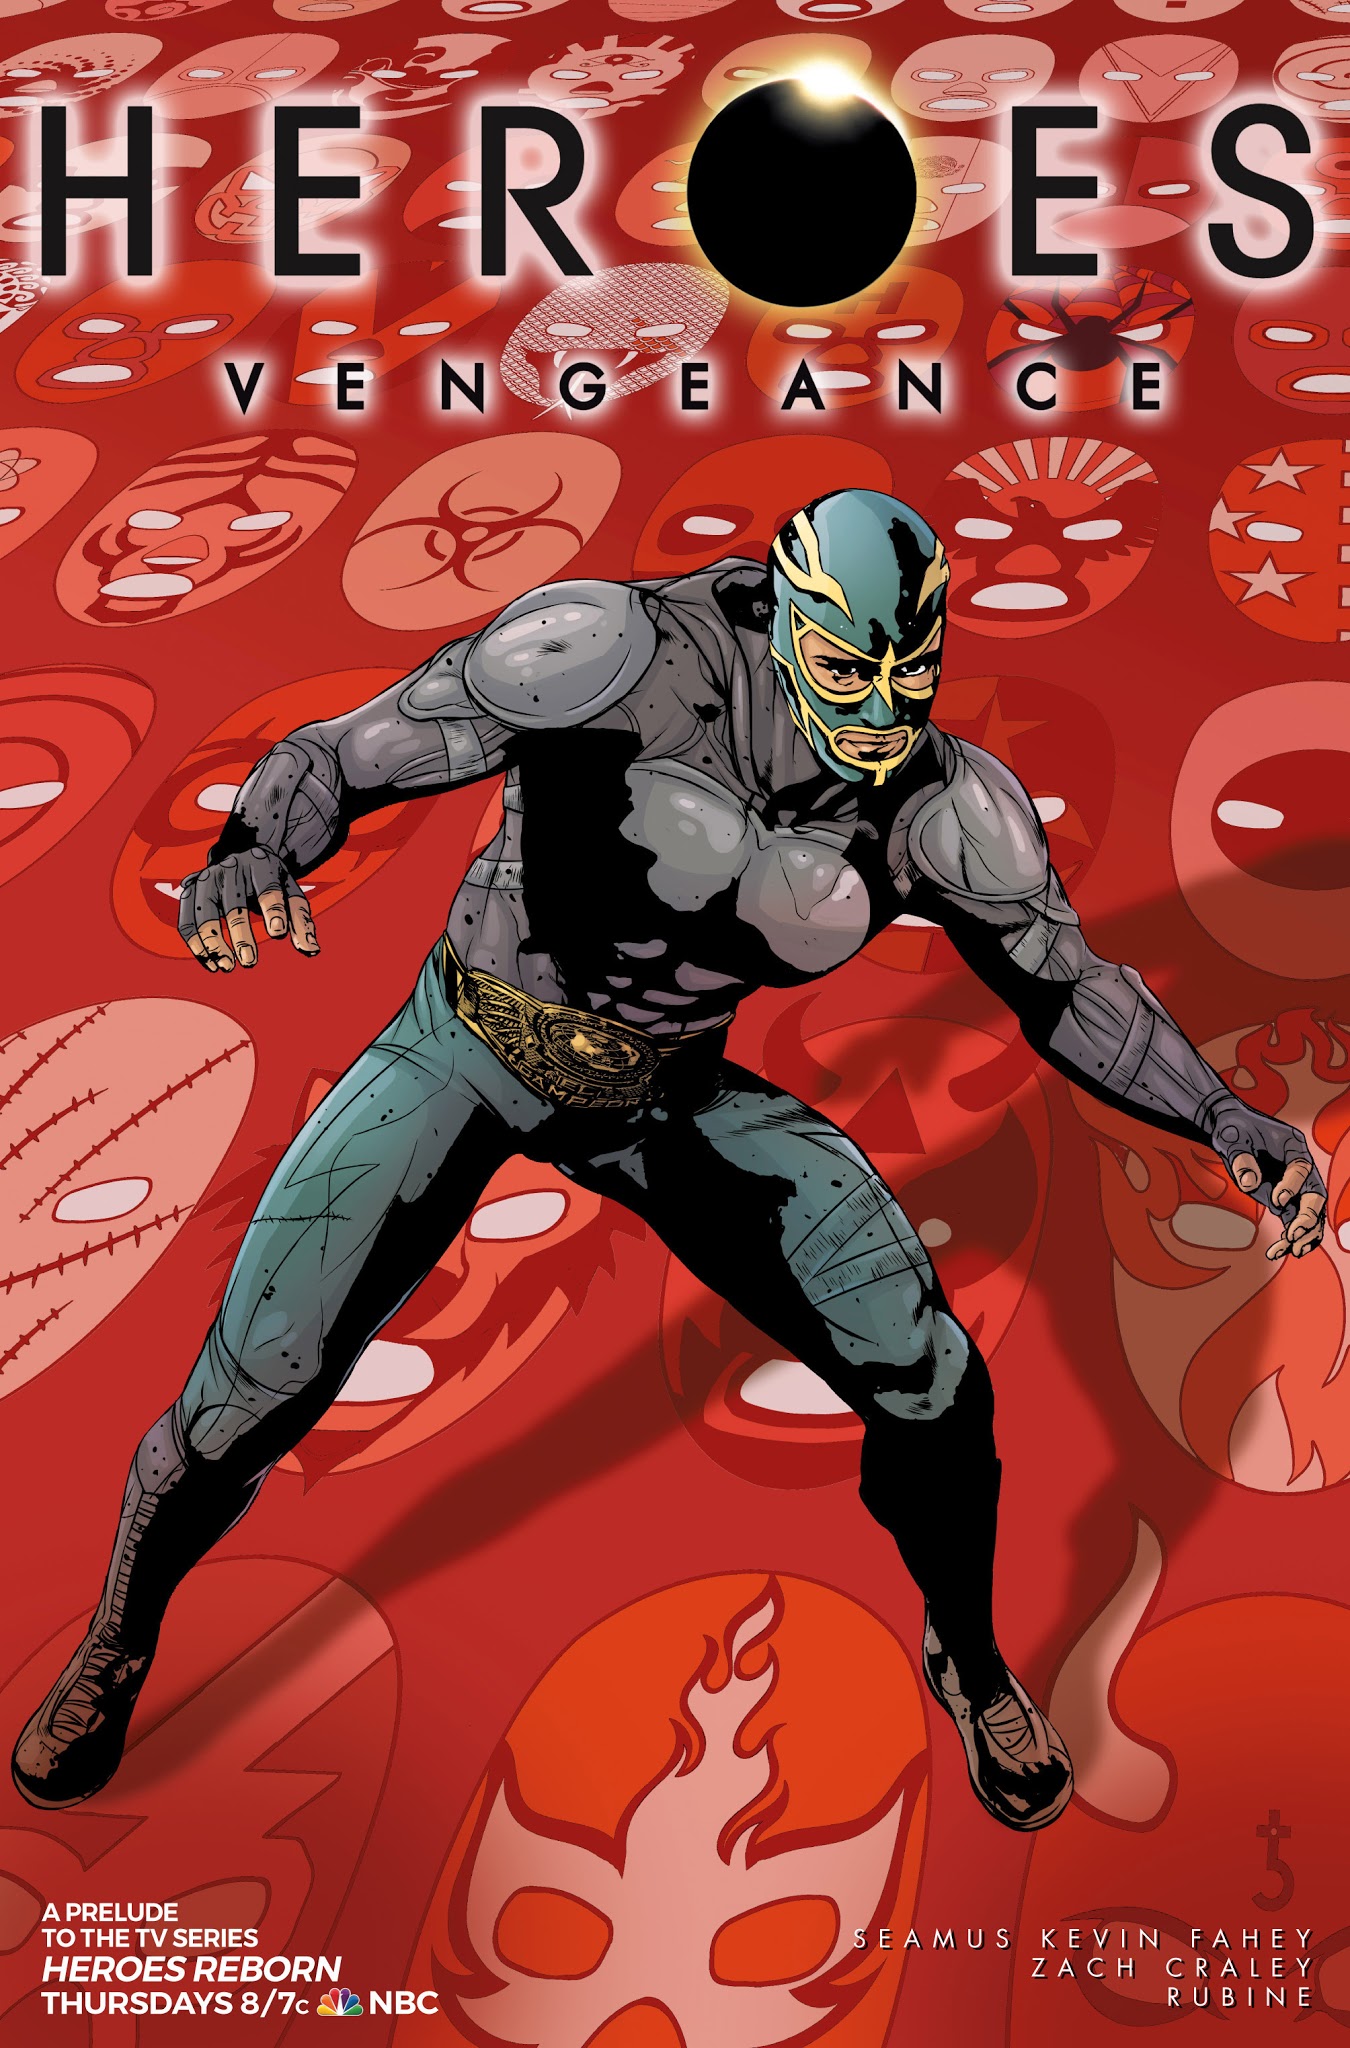 Read online Heroes: Vengeance comic -  Issue #2 - 1